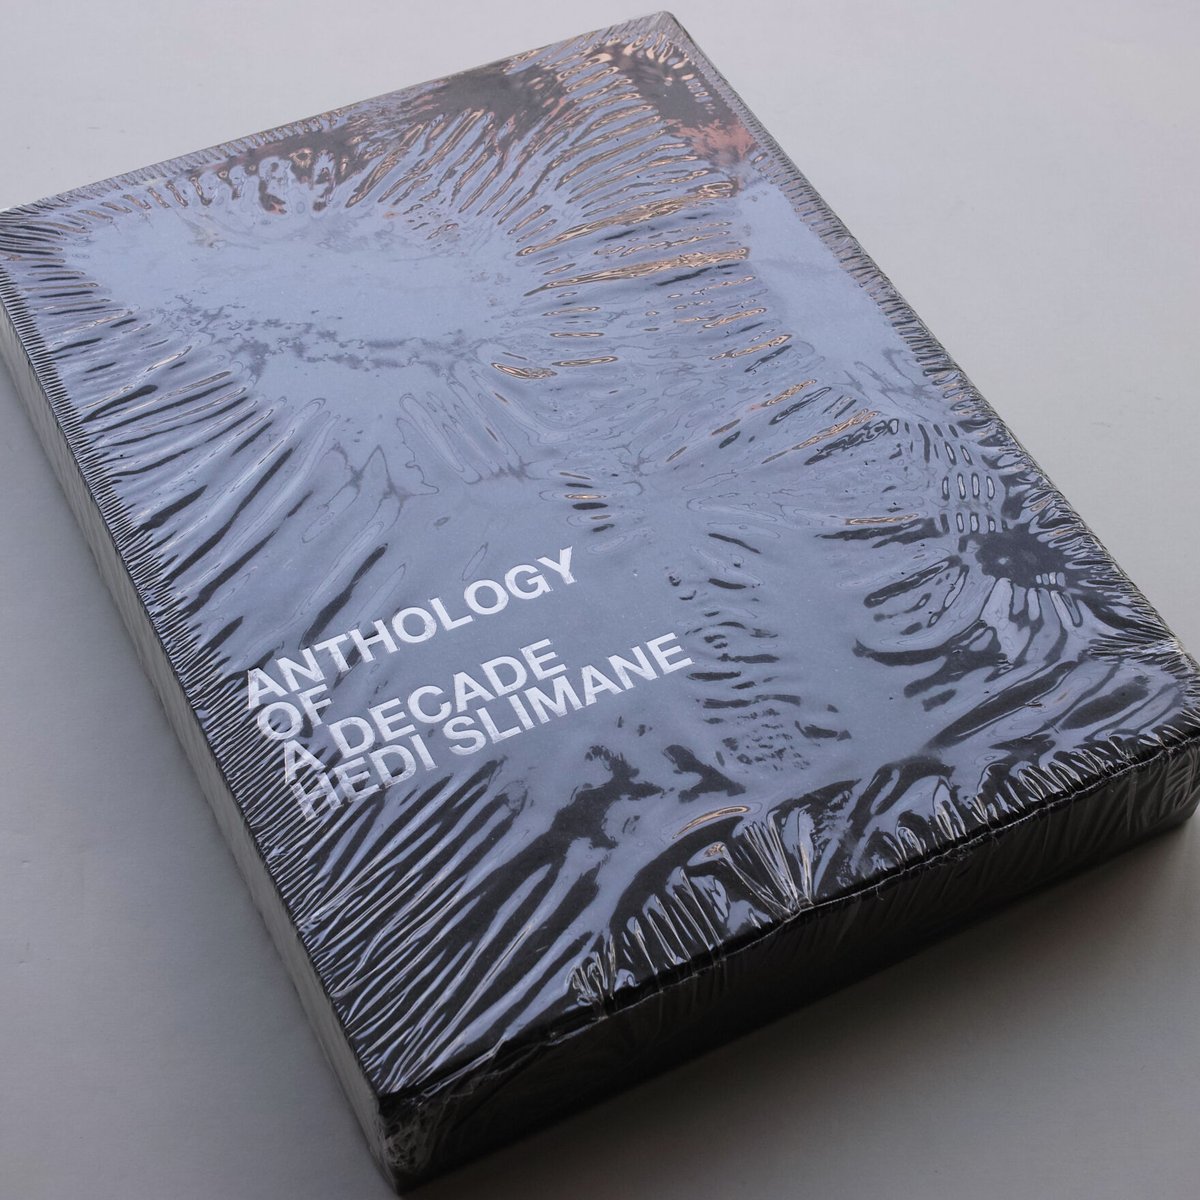 Hedi Slimane / Anthology of a Decade (box-set)